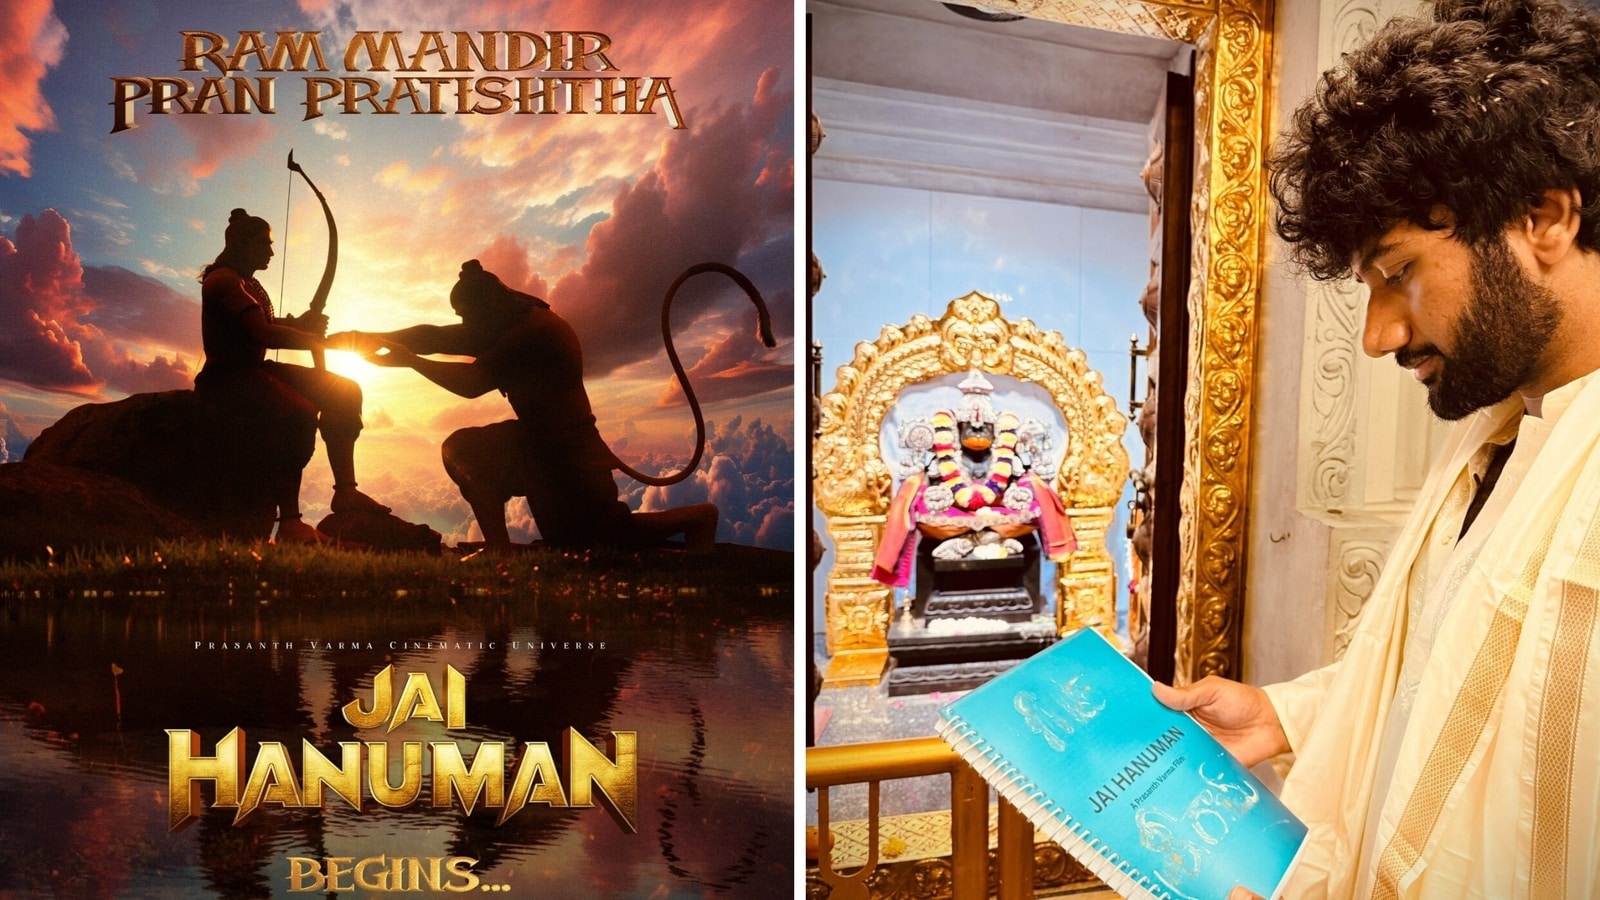 Prasanth Varma announces HanuMan sequel on Ram Mandir Pran Pratishtha